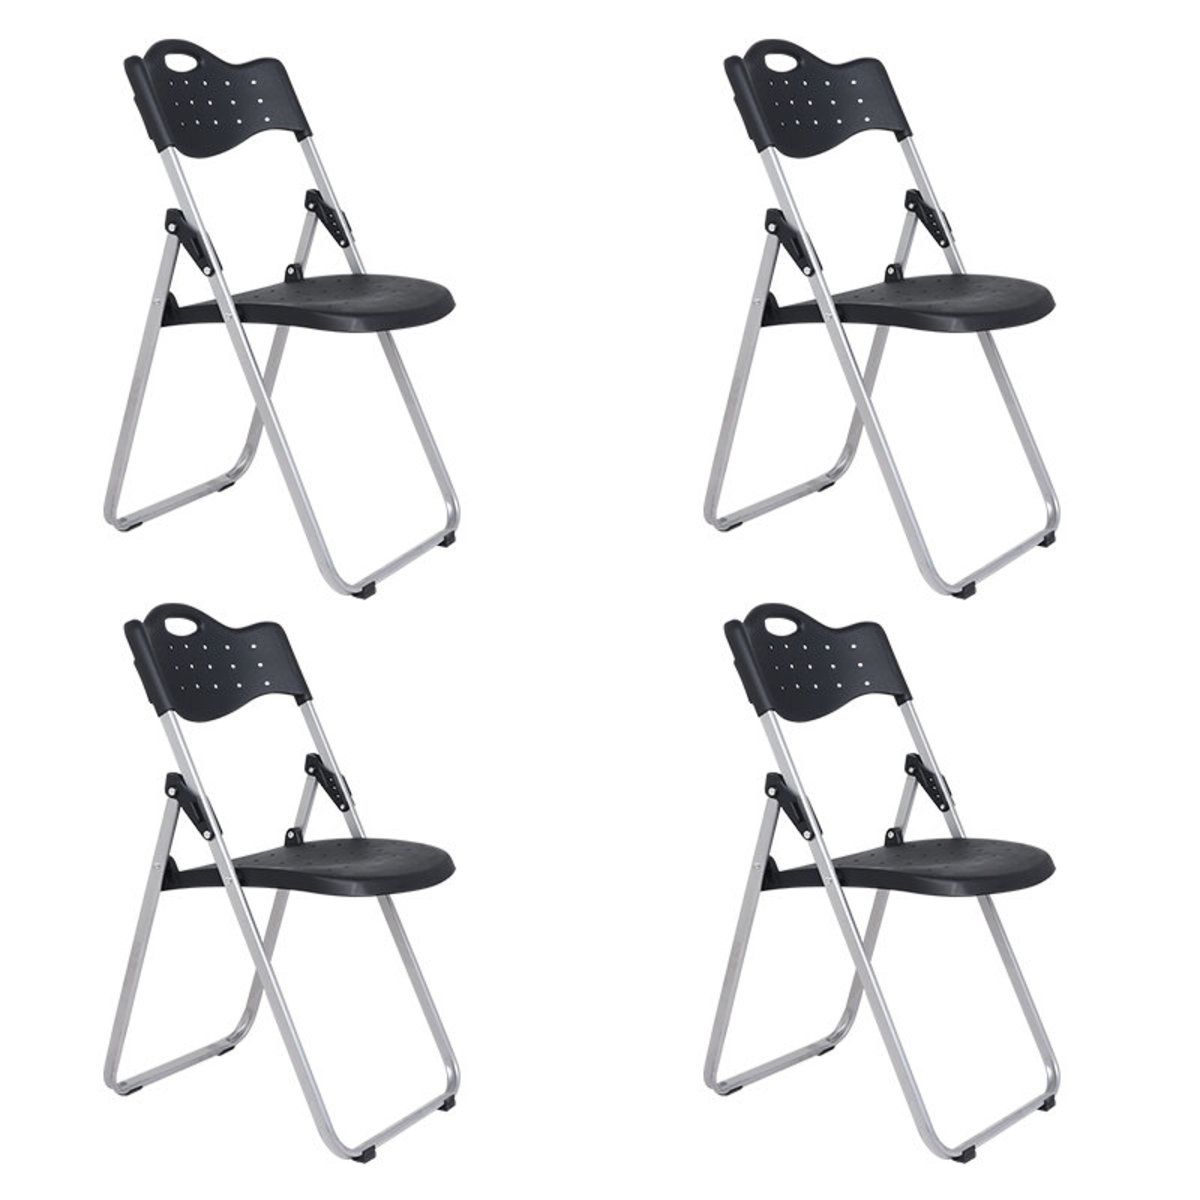 4 Pcs Plasitc Folding Chairs MR-396 Black